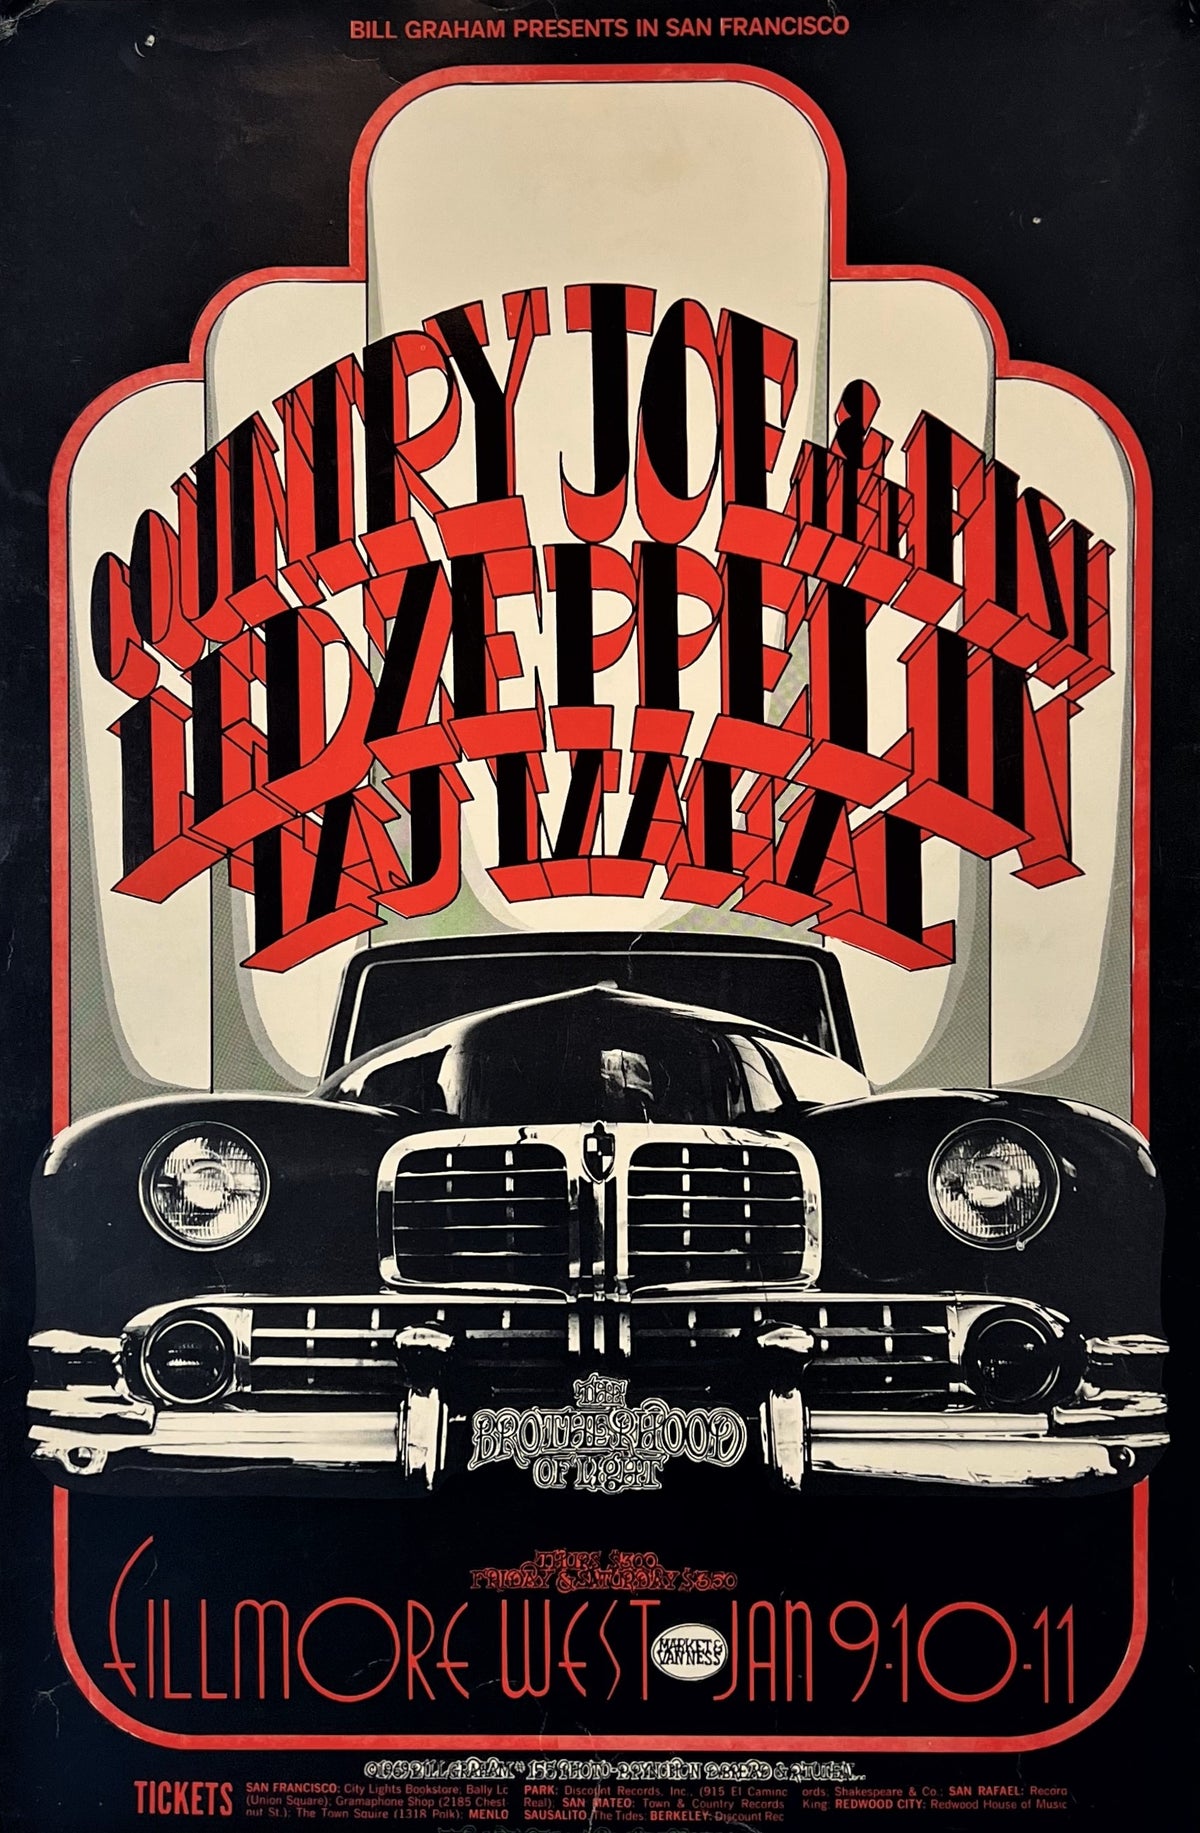 Led Zeppelin, Country Joe- Fillmore Auditorium BG-155 - Authentic Vintage Poster